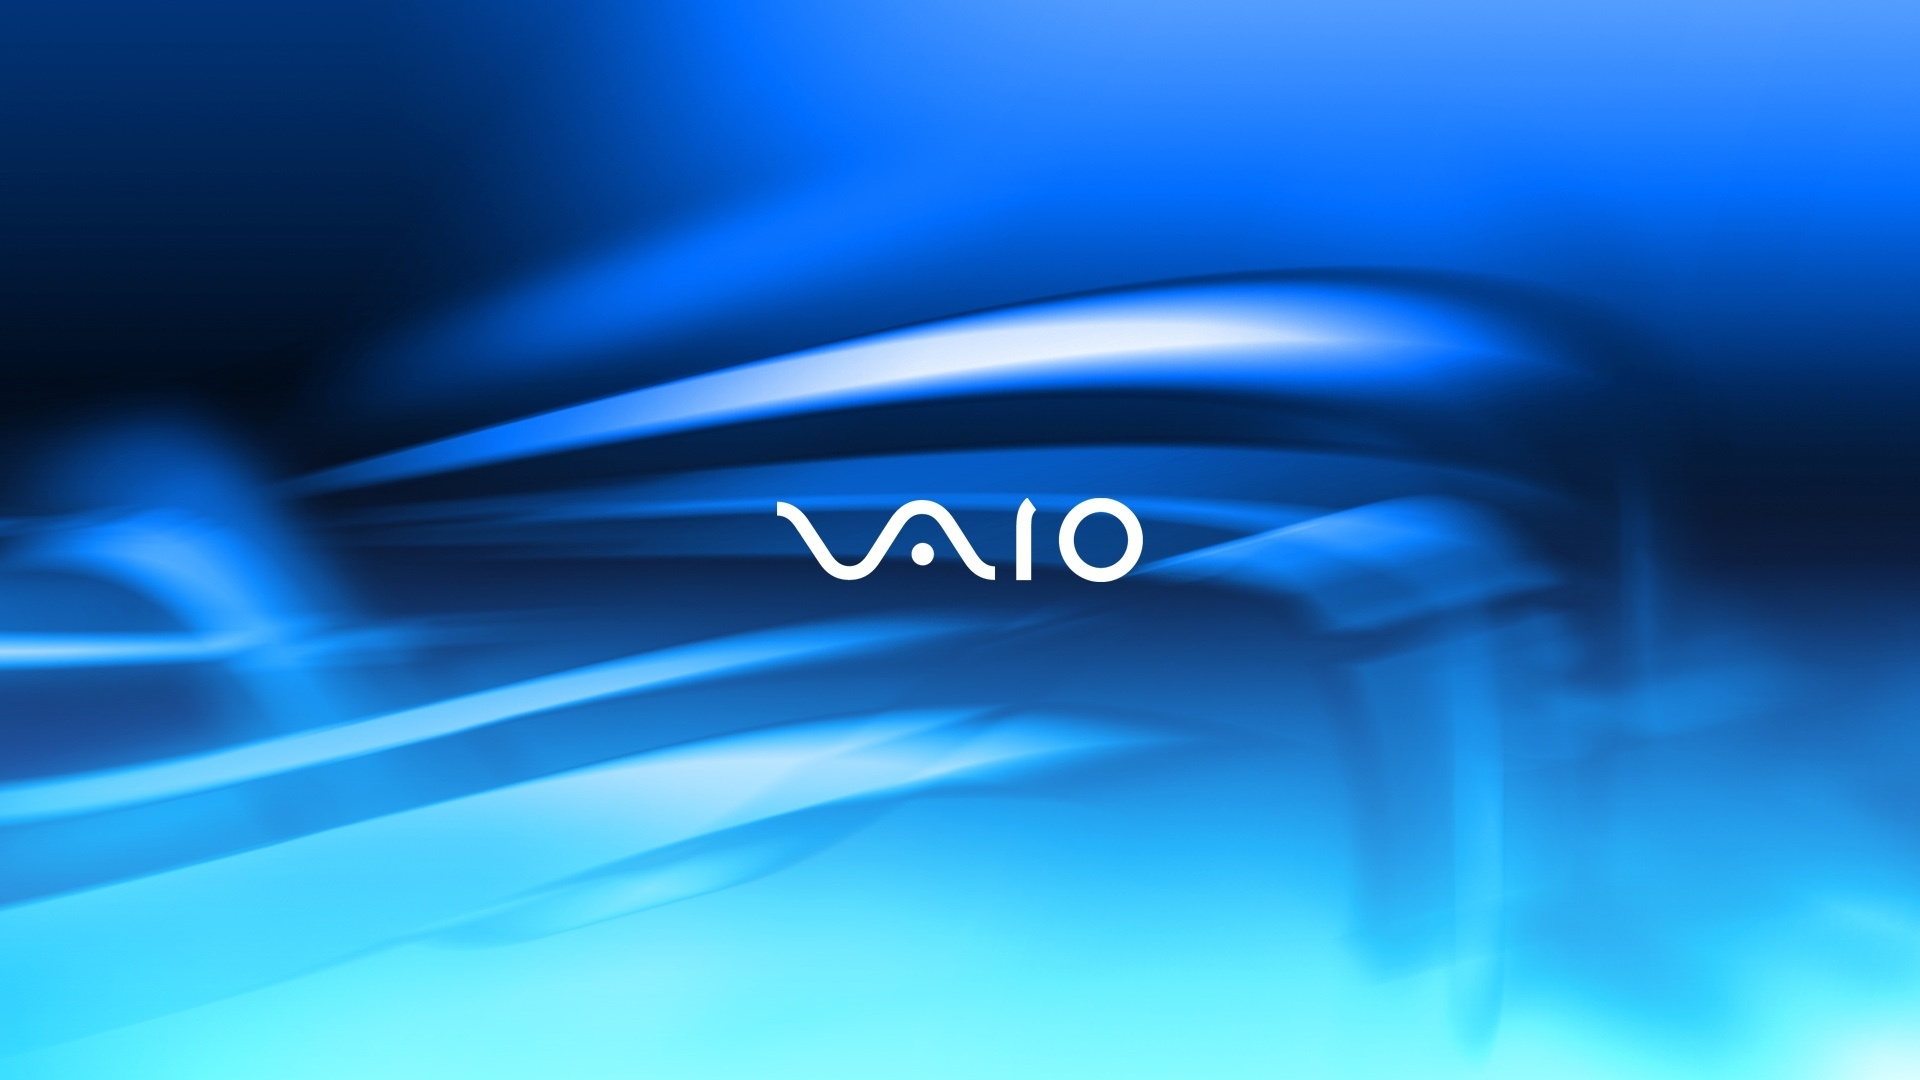 Vaio light blue for 1920 x 1080 HDTV 1080p resolution